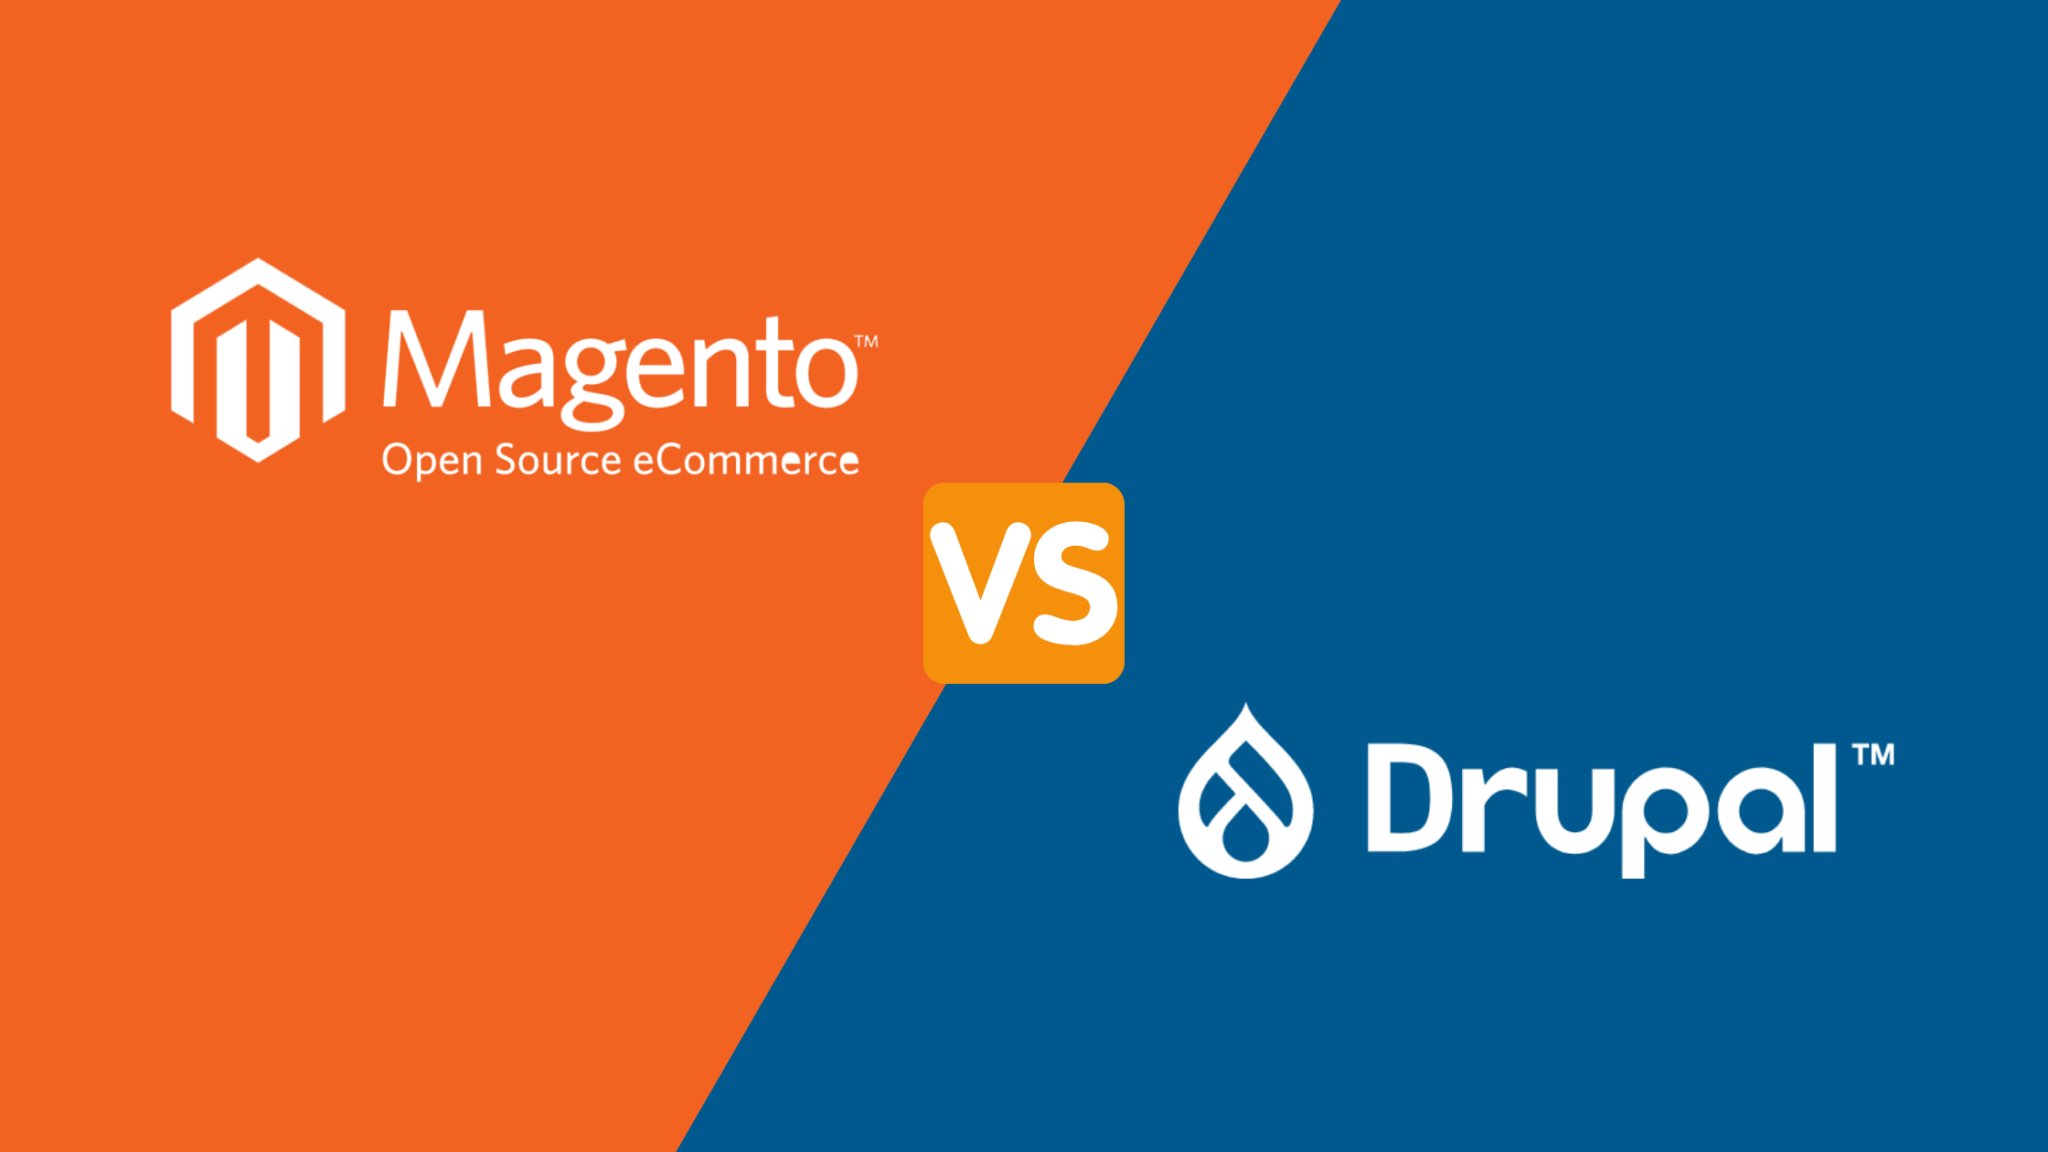 Magento vs Drupal: The CMS War